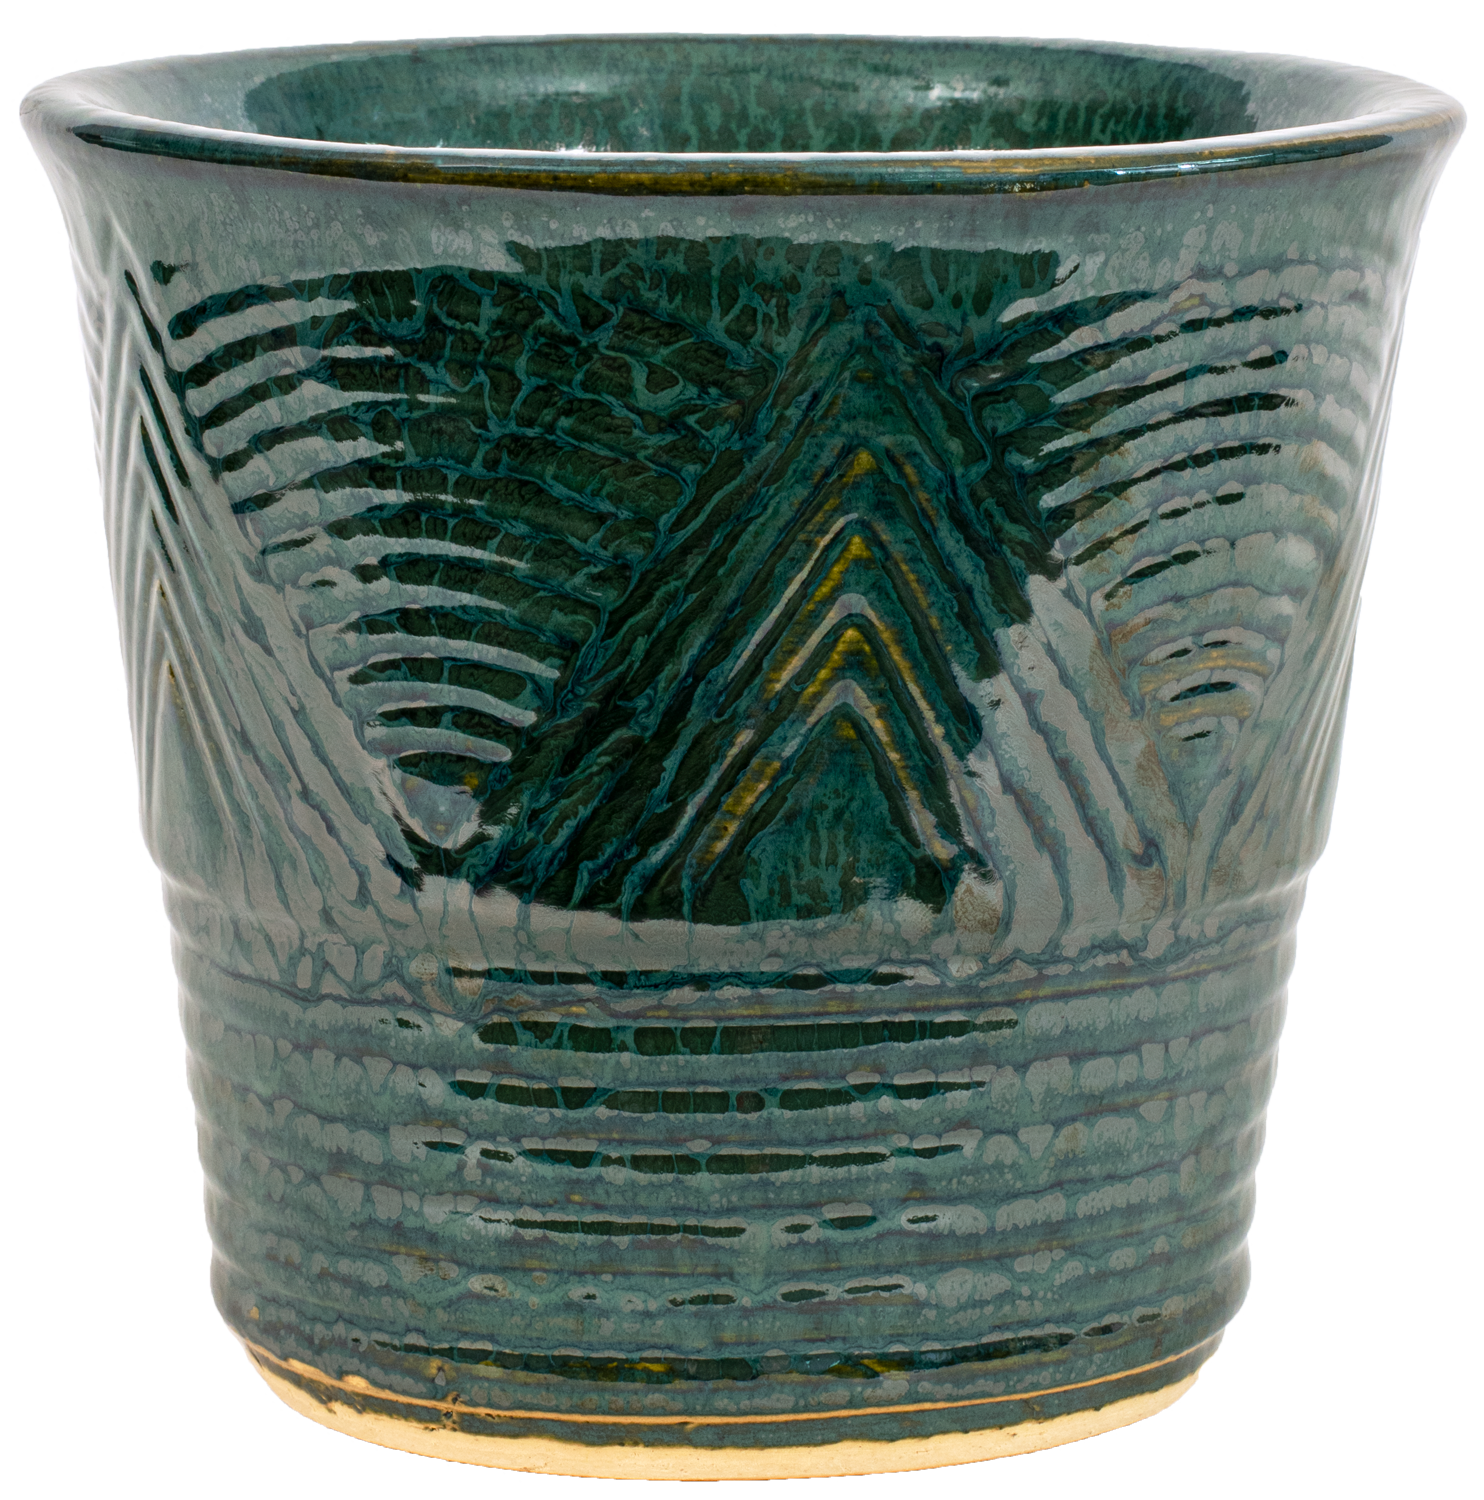 American Made indoor ceramic planter. Art deco style design in a green glaze color